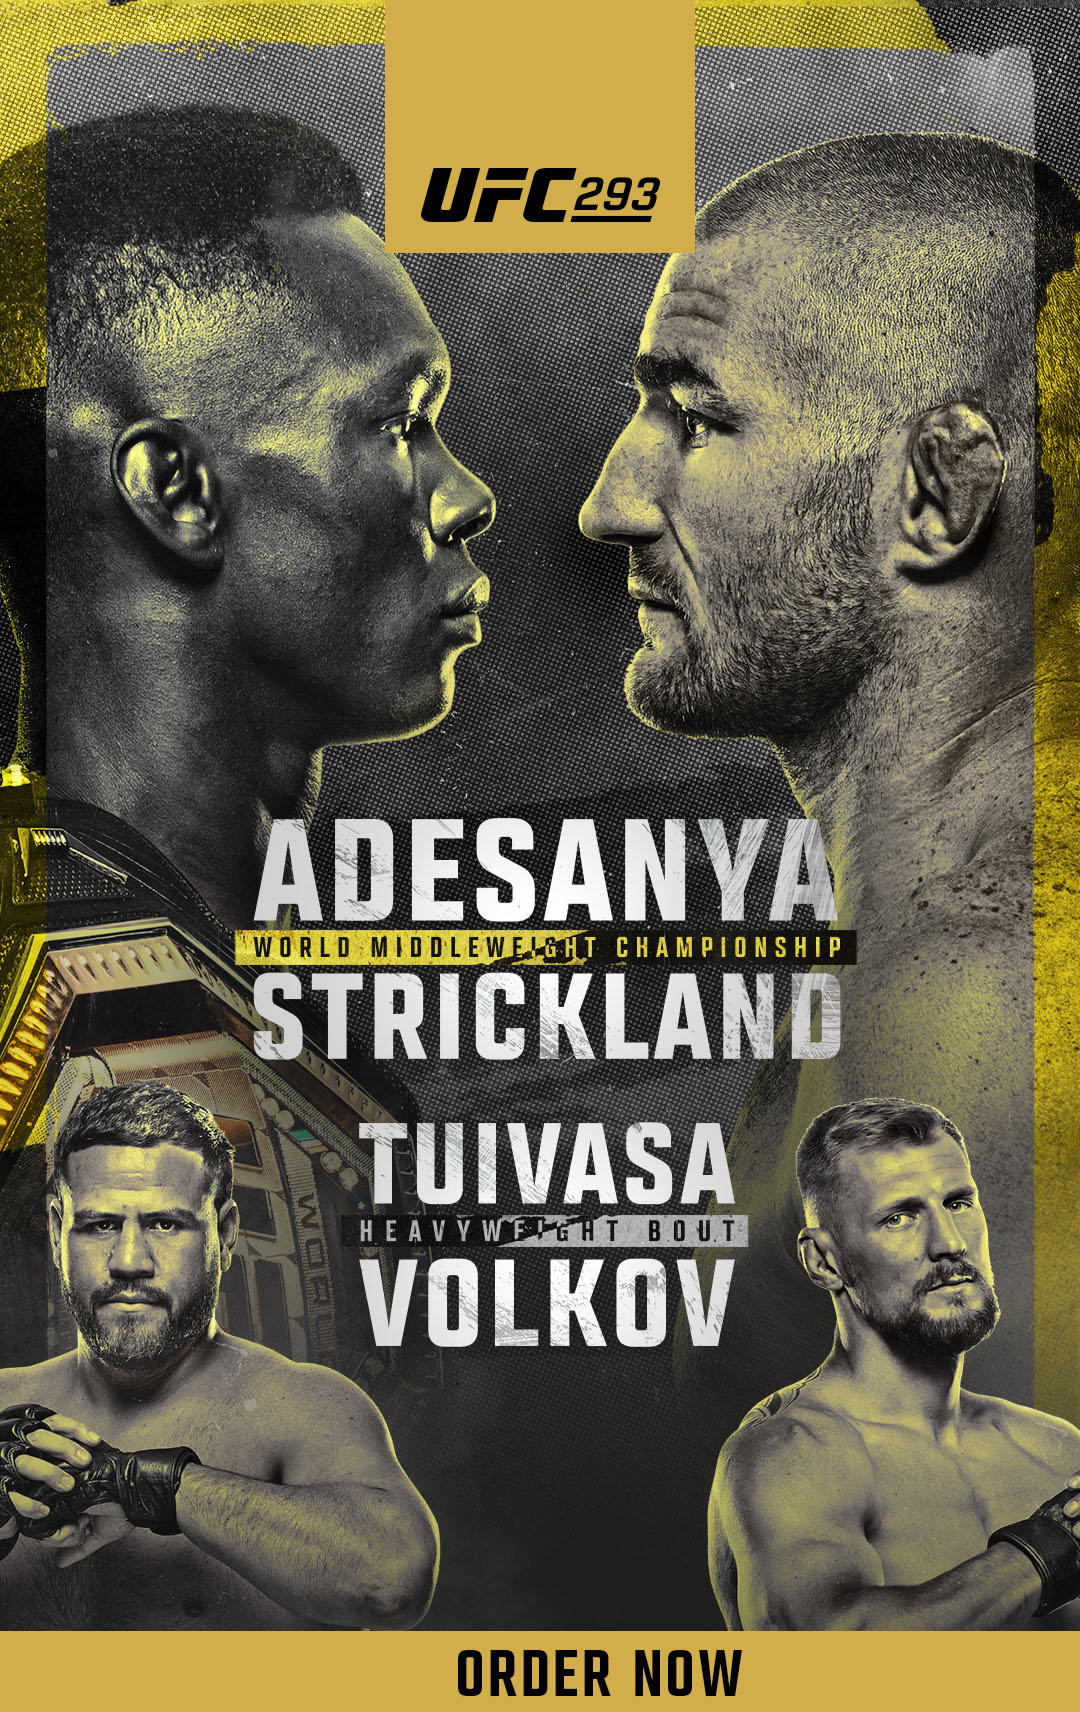 Order UFC 293: Adesanya vs Strickland